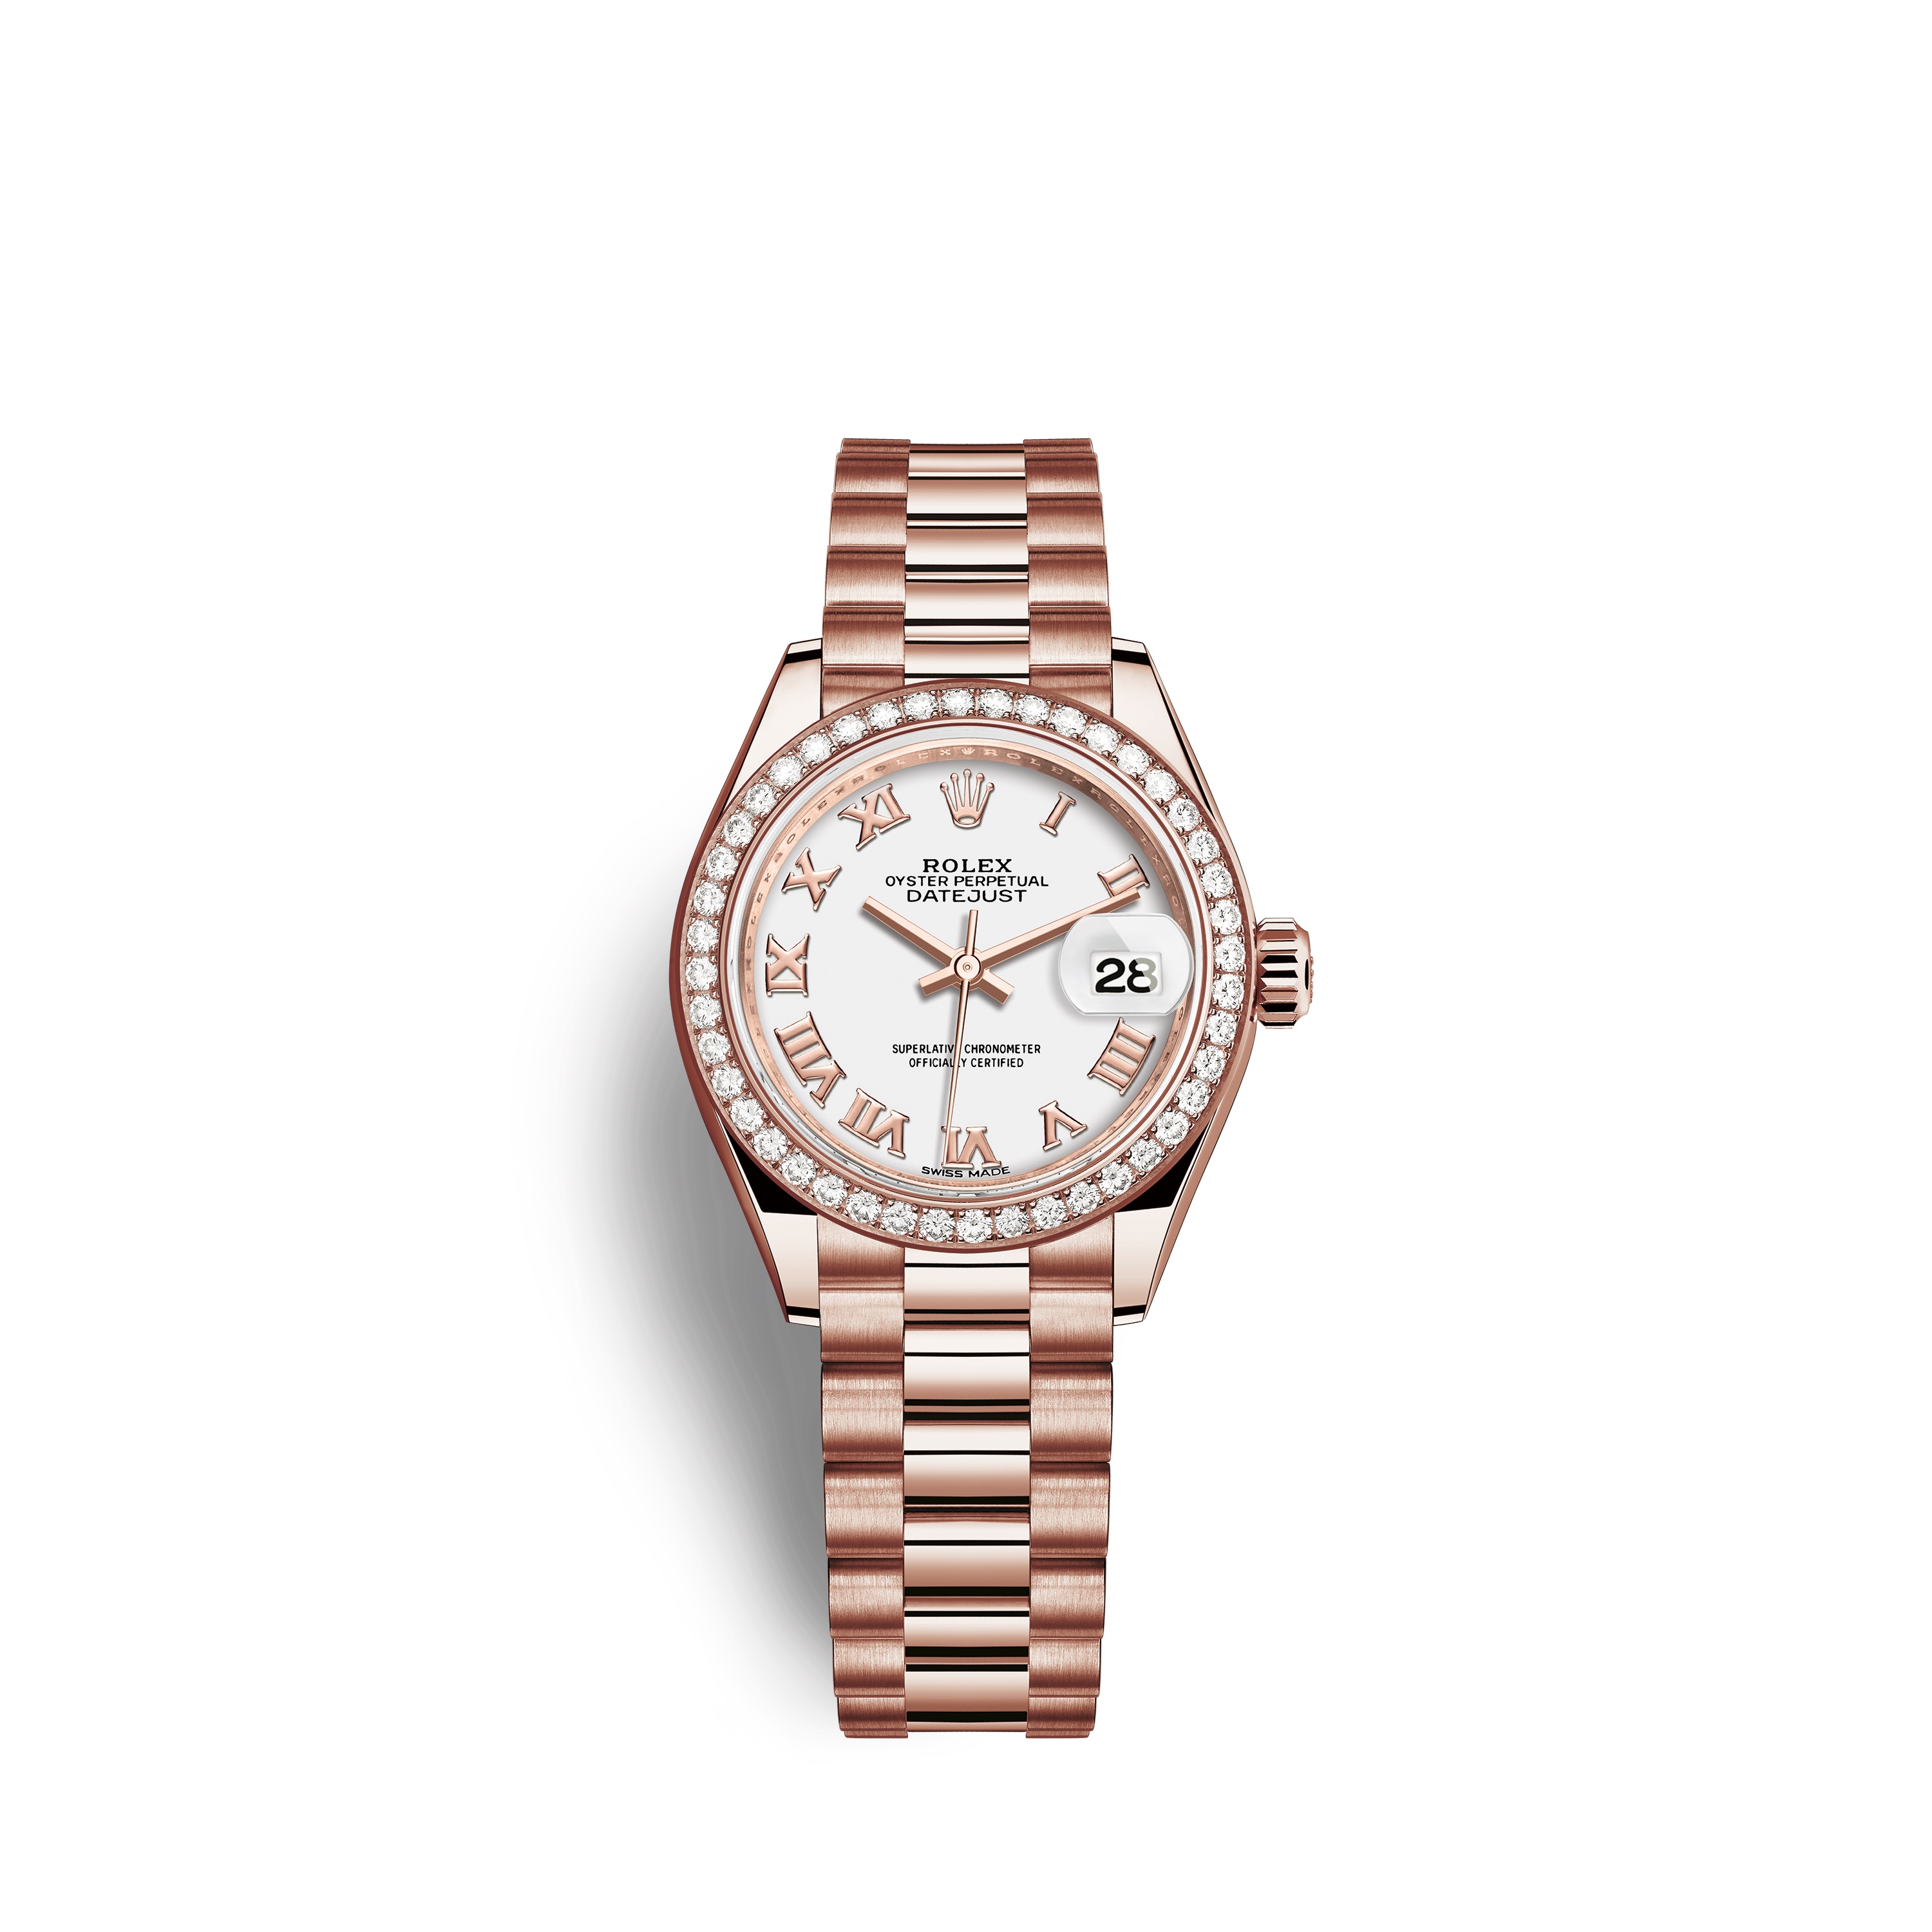 Lady-Datejust 28 279135RBR Rose Gold & Diamonds Watch (White)